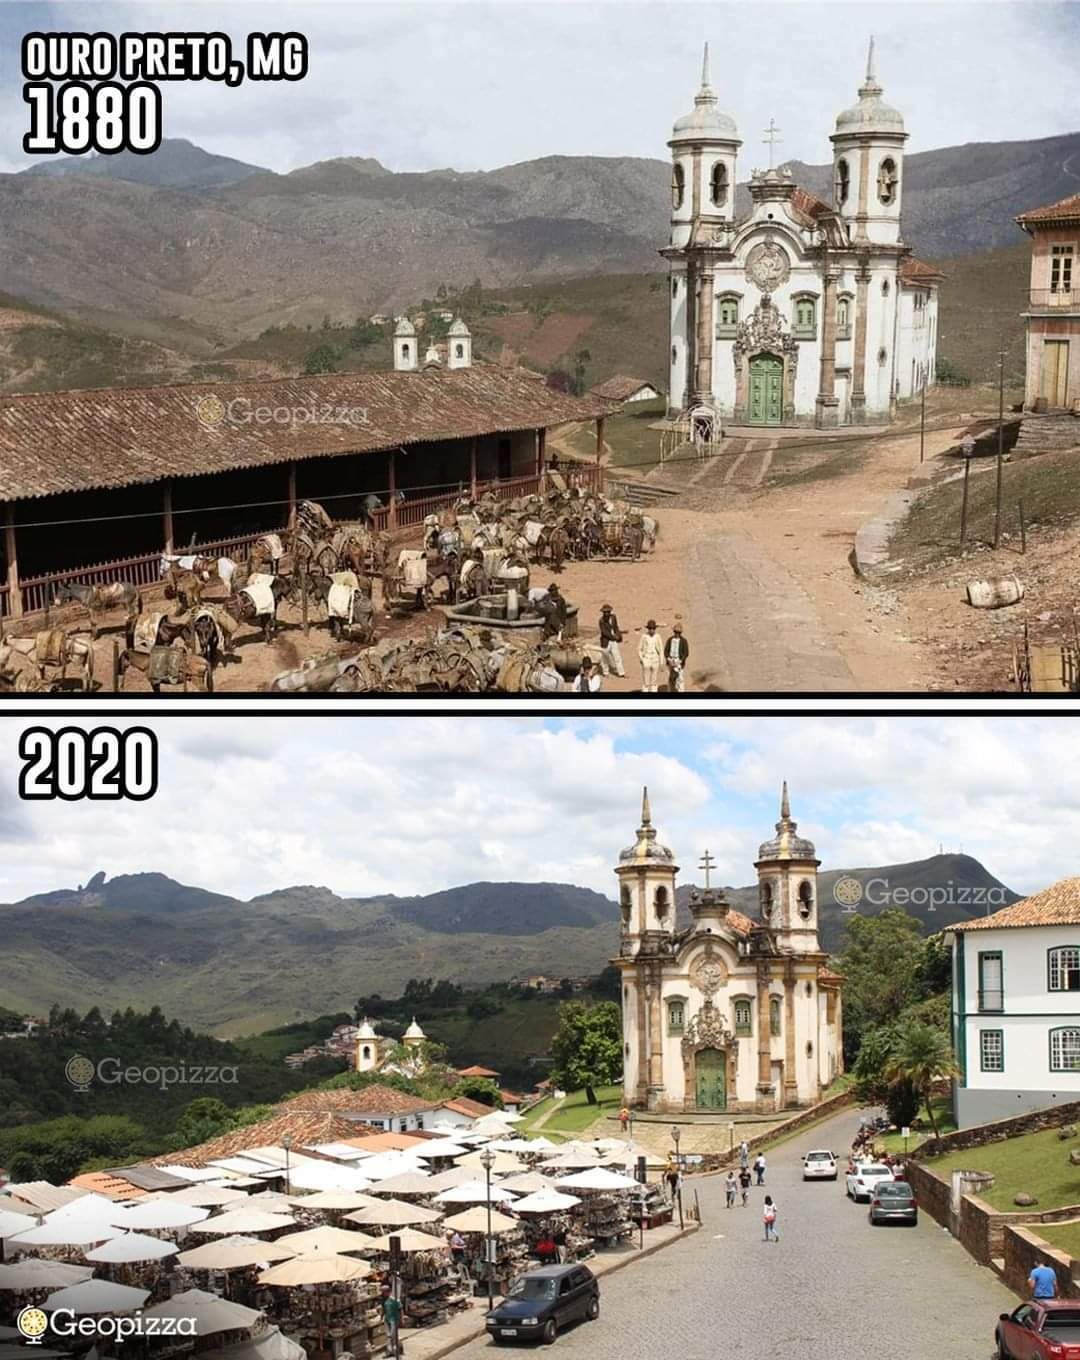 Ouro Preto, Brazil - Then And Now Photos